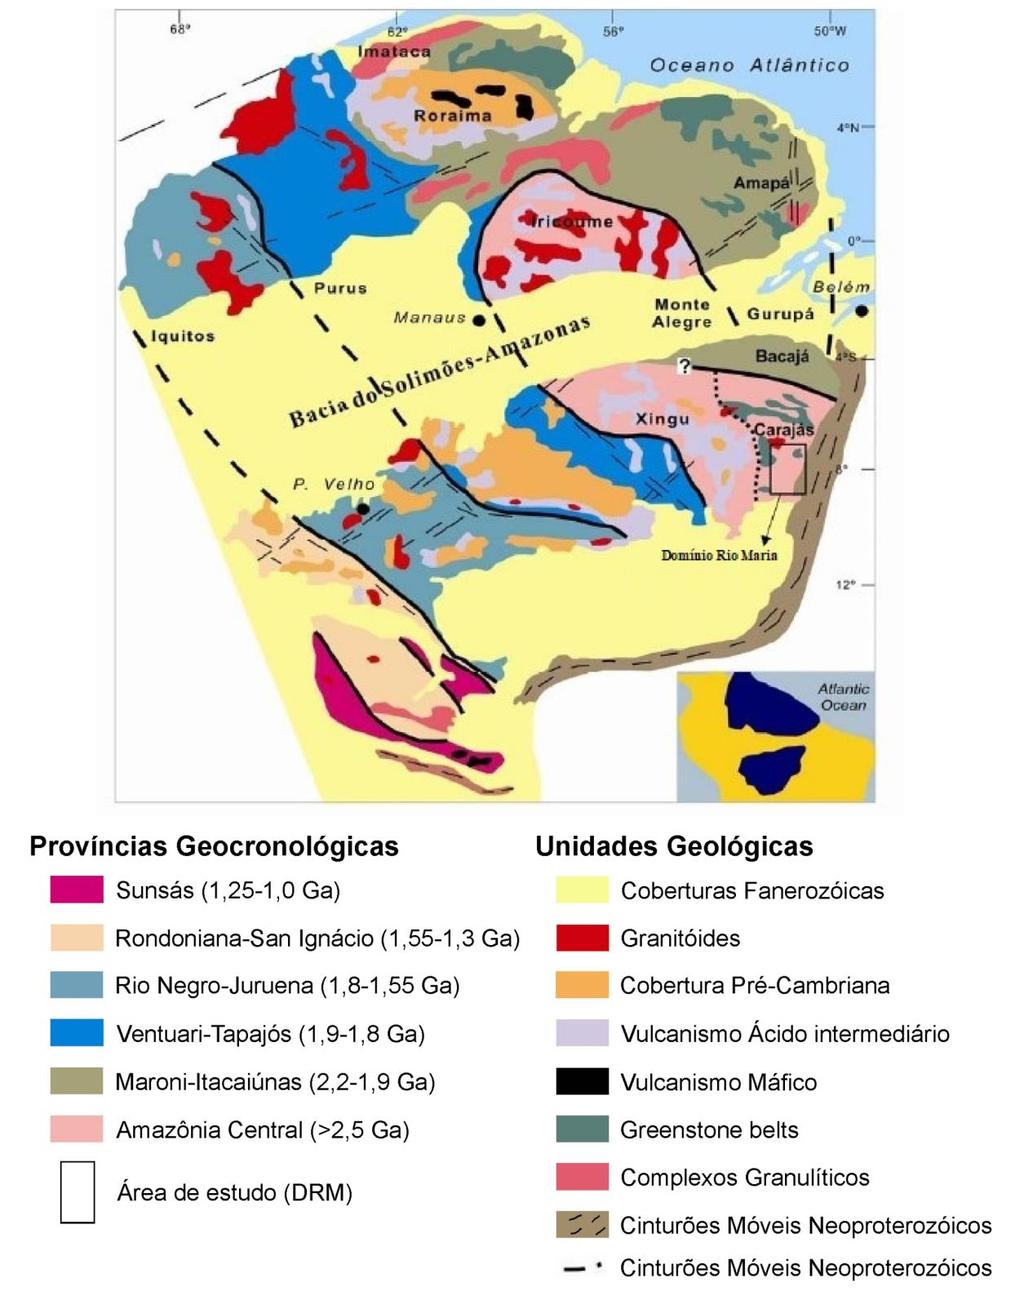 Figura 2 - Províncias Geocronológicas do Cráton